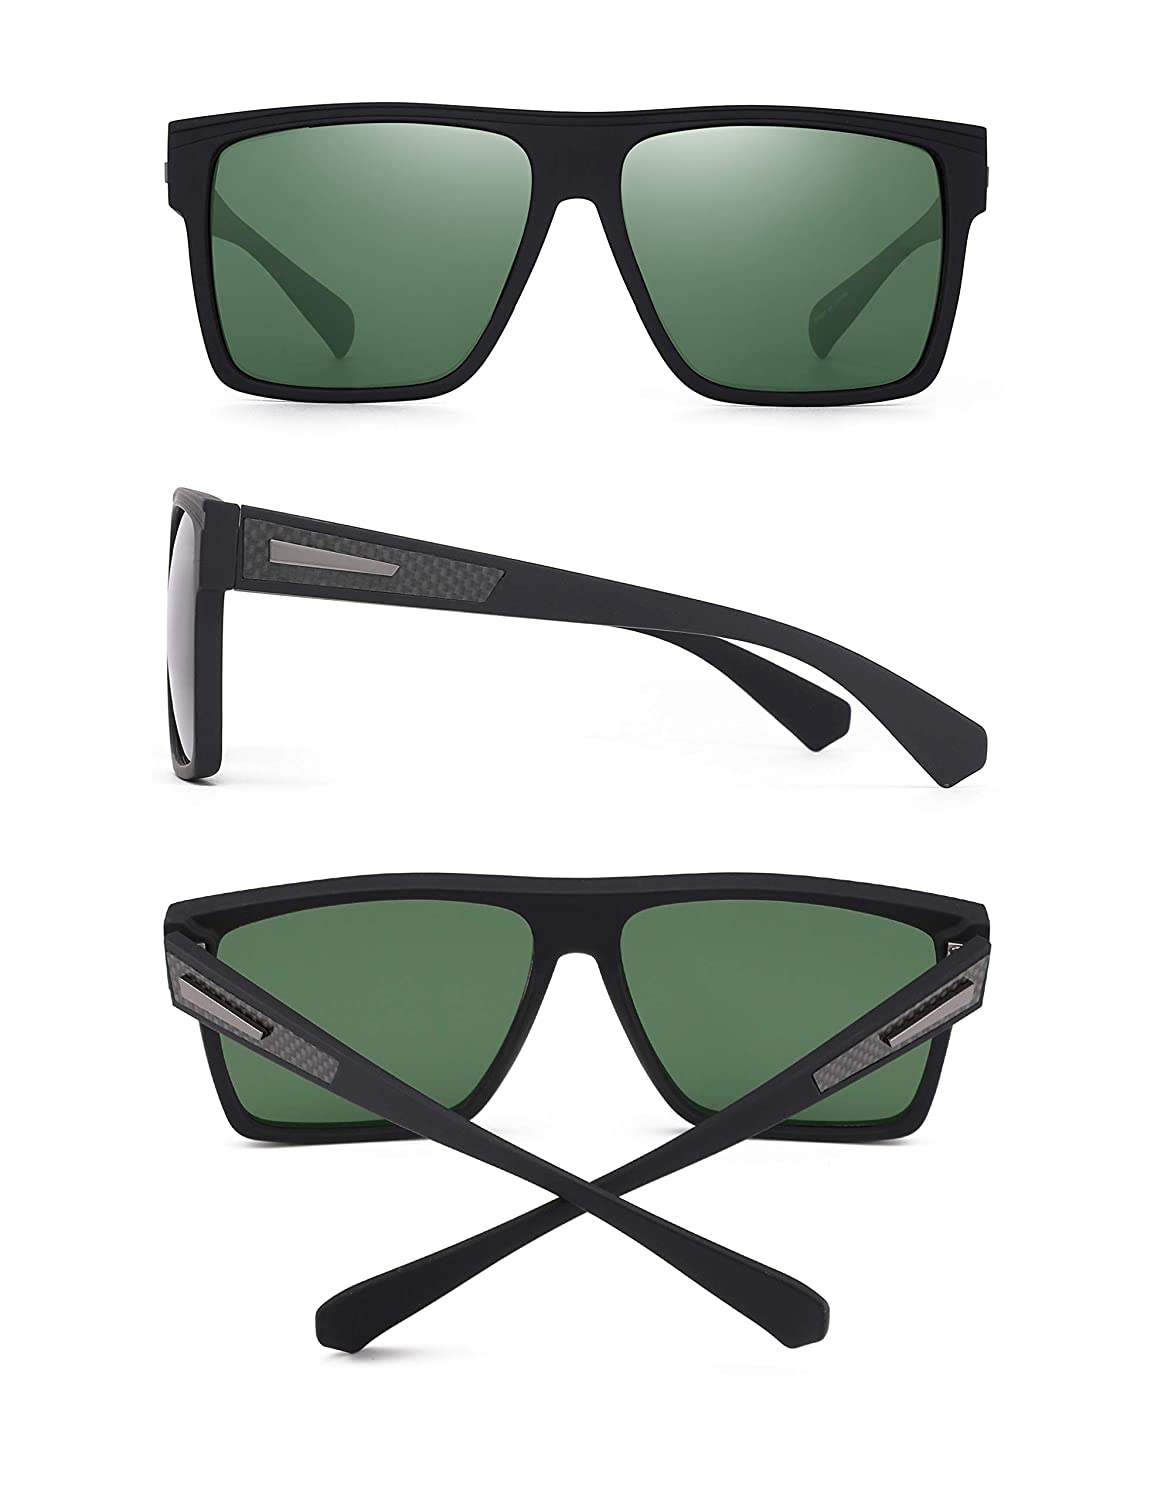 JIM HALO Polarized Driving Sunglasses Retro Square UV protection Classic  Sun Glasses Men